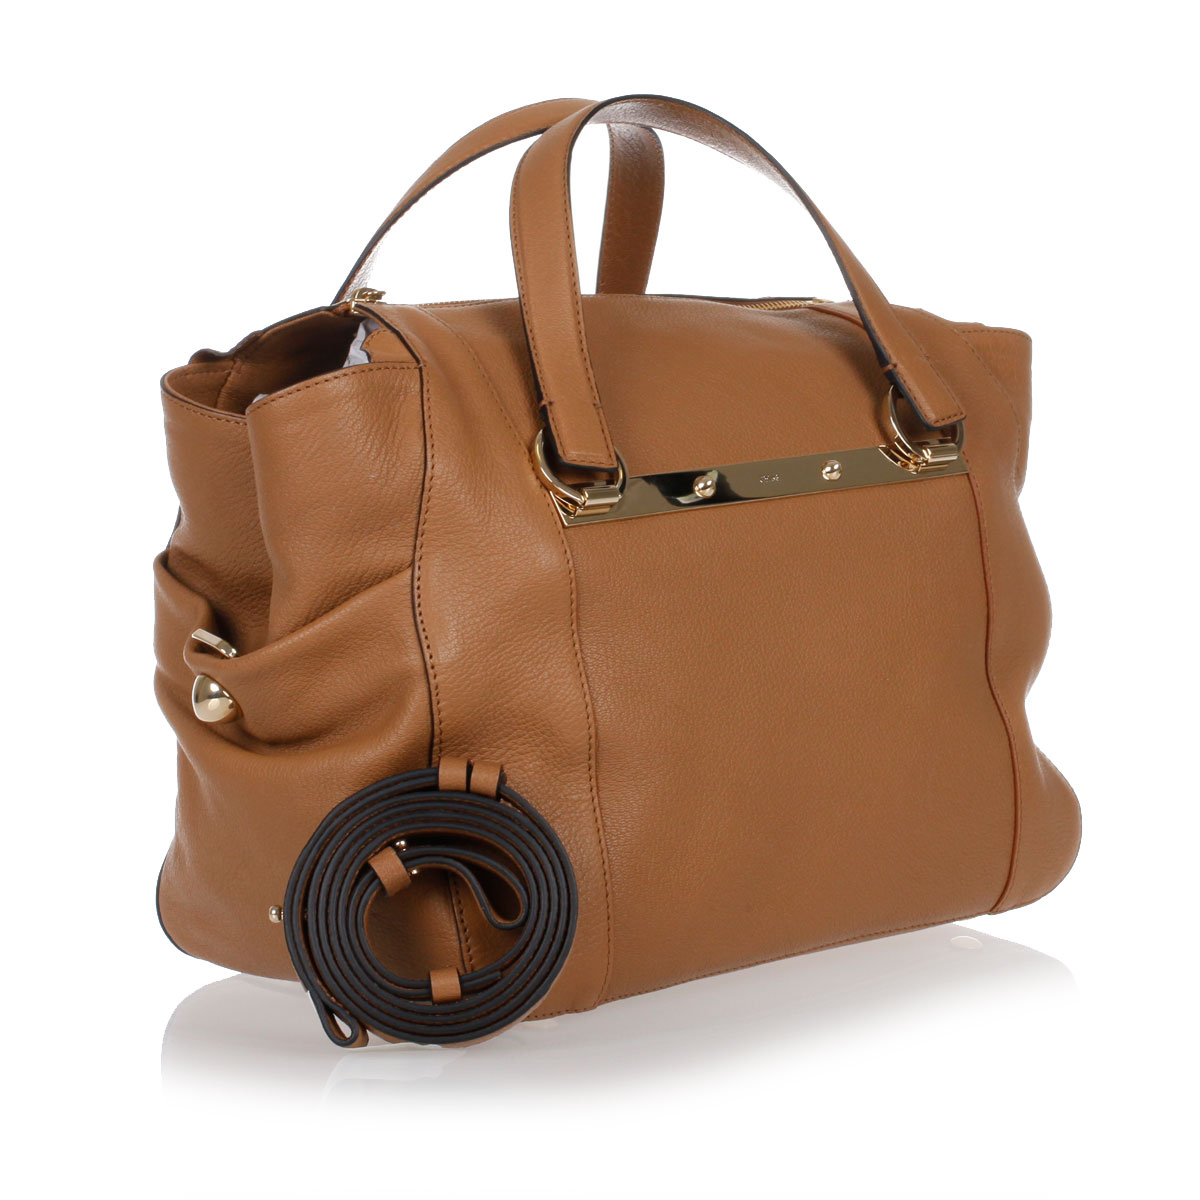 cloe handbag - Chloe Women DINGHY WOOD Leather Handbag - Spence Outlet